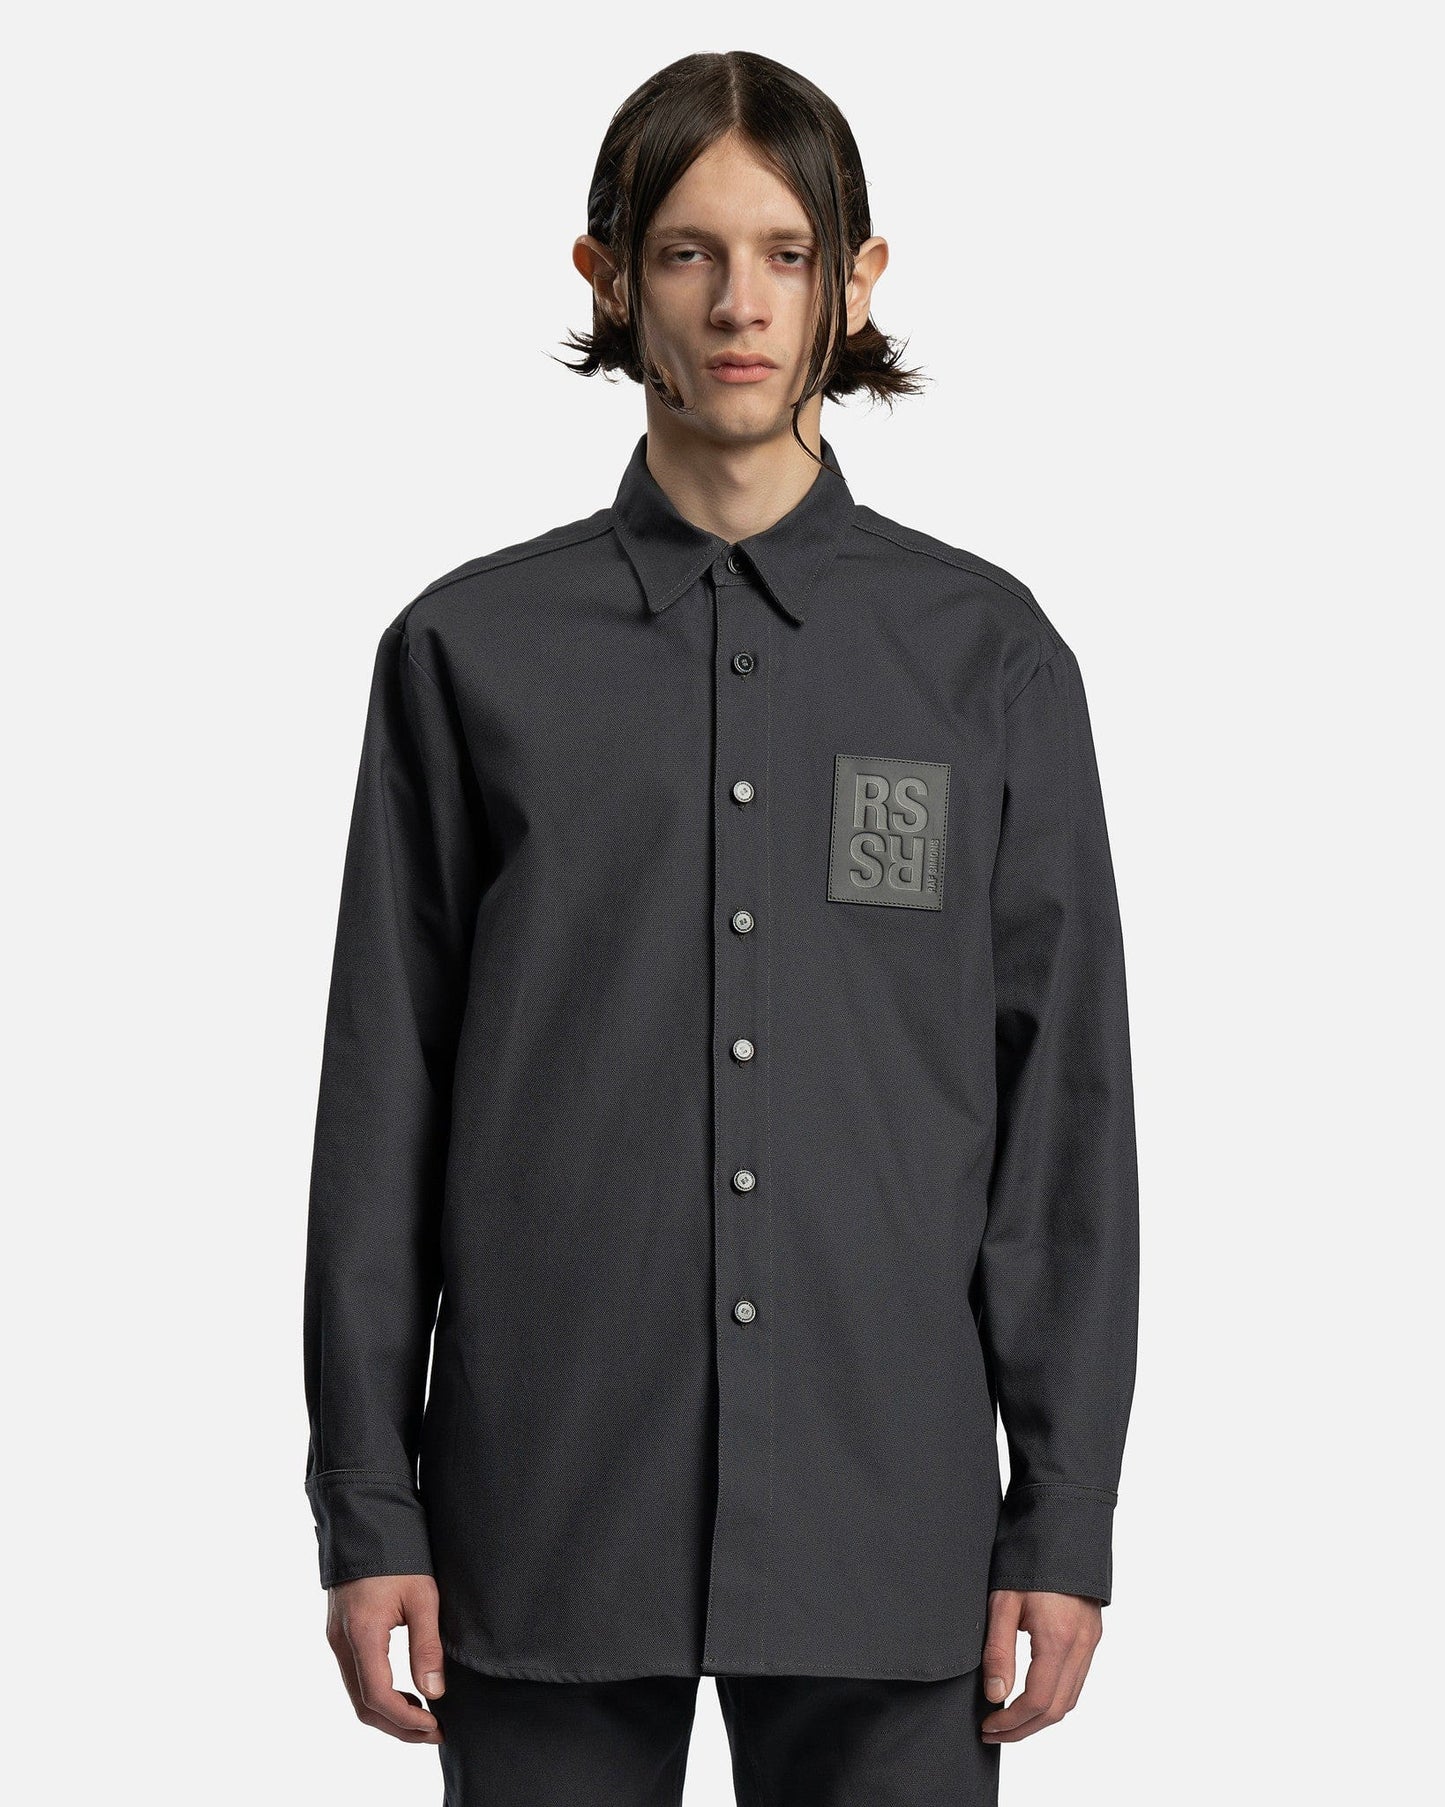 Raf Simons Men's Shirts Leather Patch Straight Fit Denim Shirt in Dark Grey